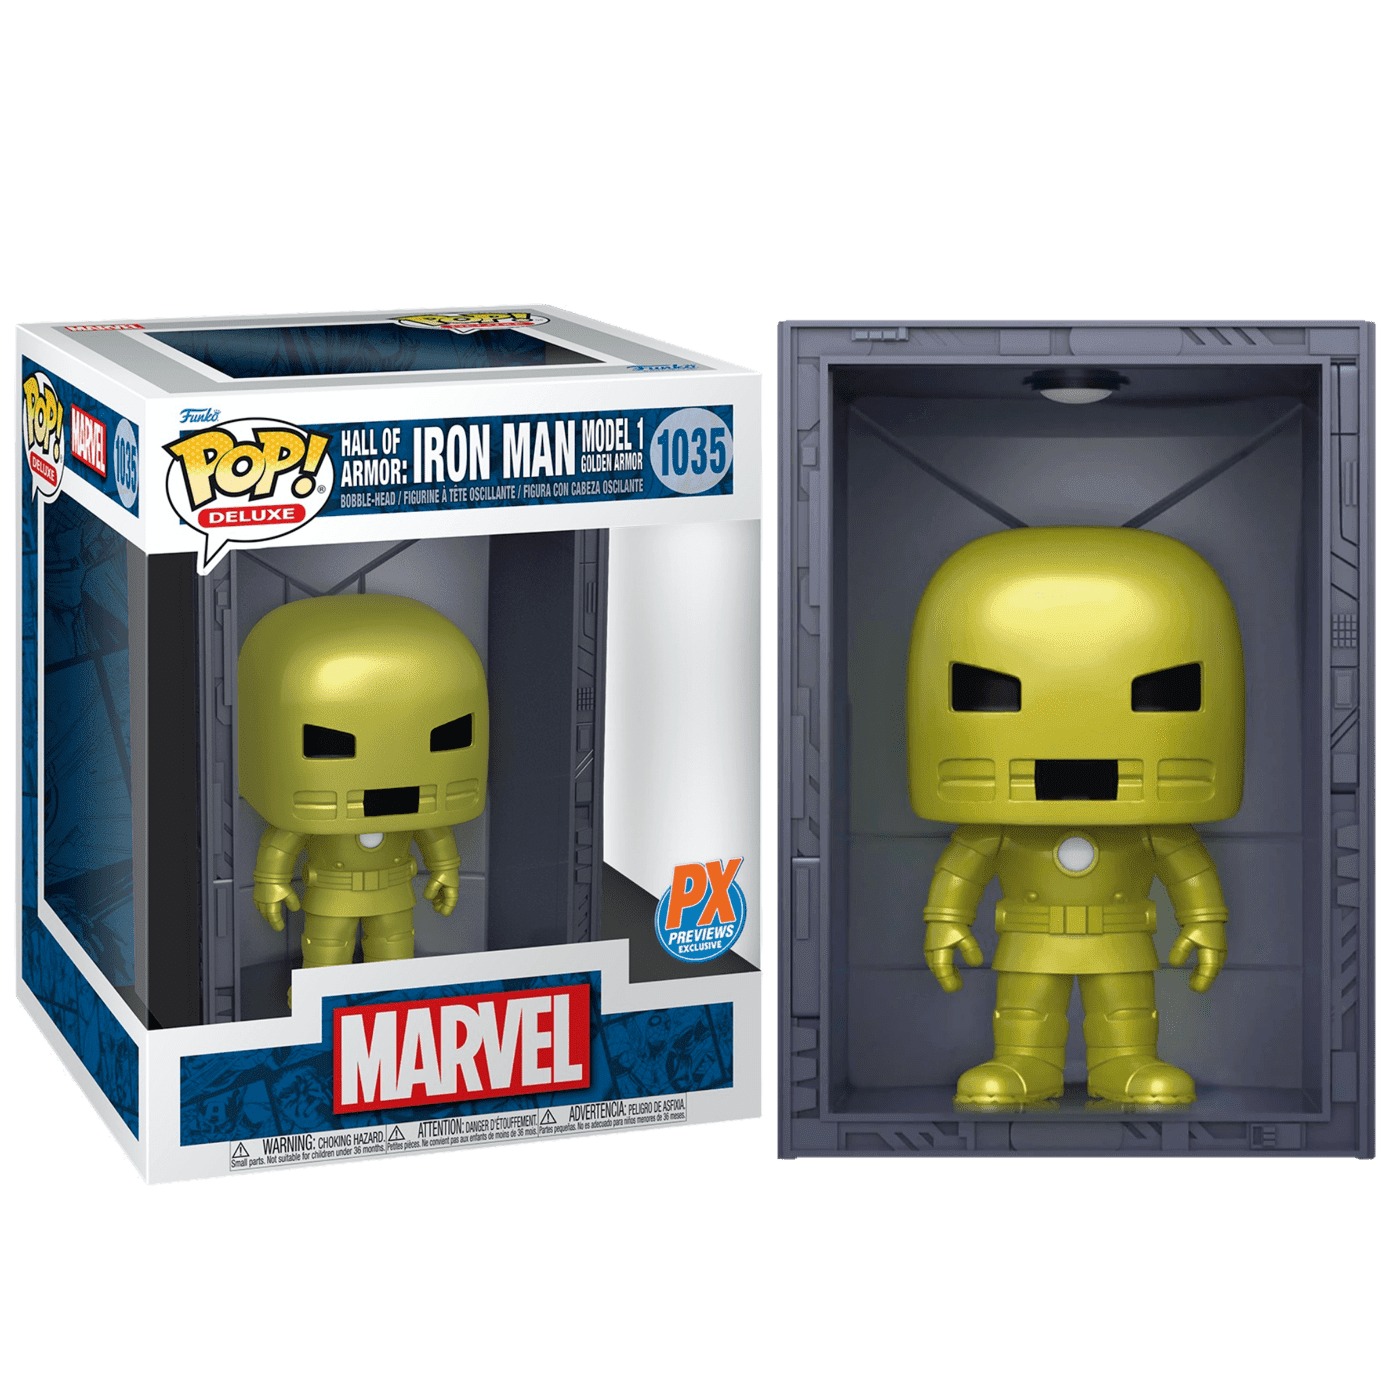 Фигурка Funko Pop! Marvel: Iron Man Hall of Armor Model 1 Deluxe Vinyl Figure рюкзак iron man железный человек белый 1